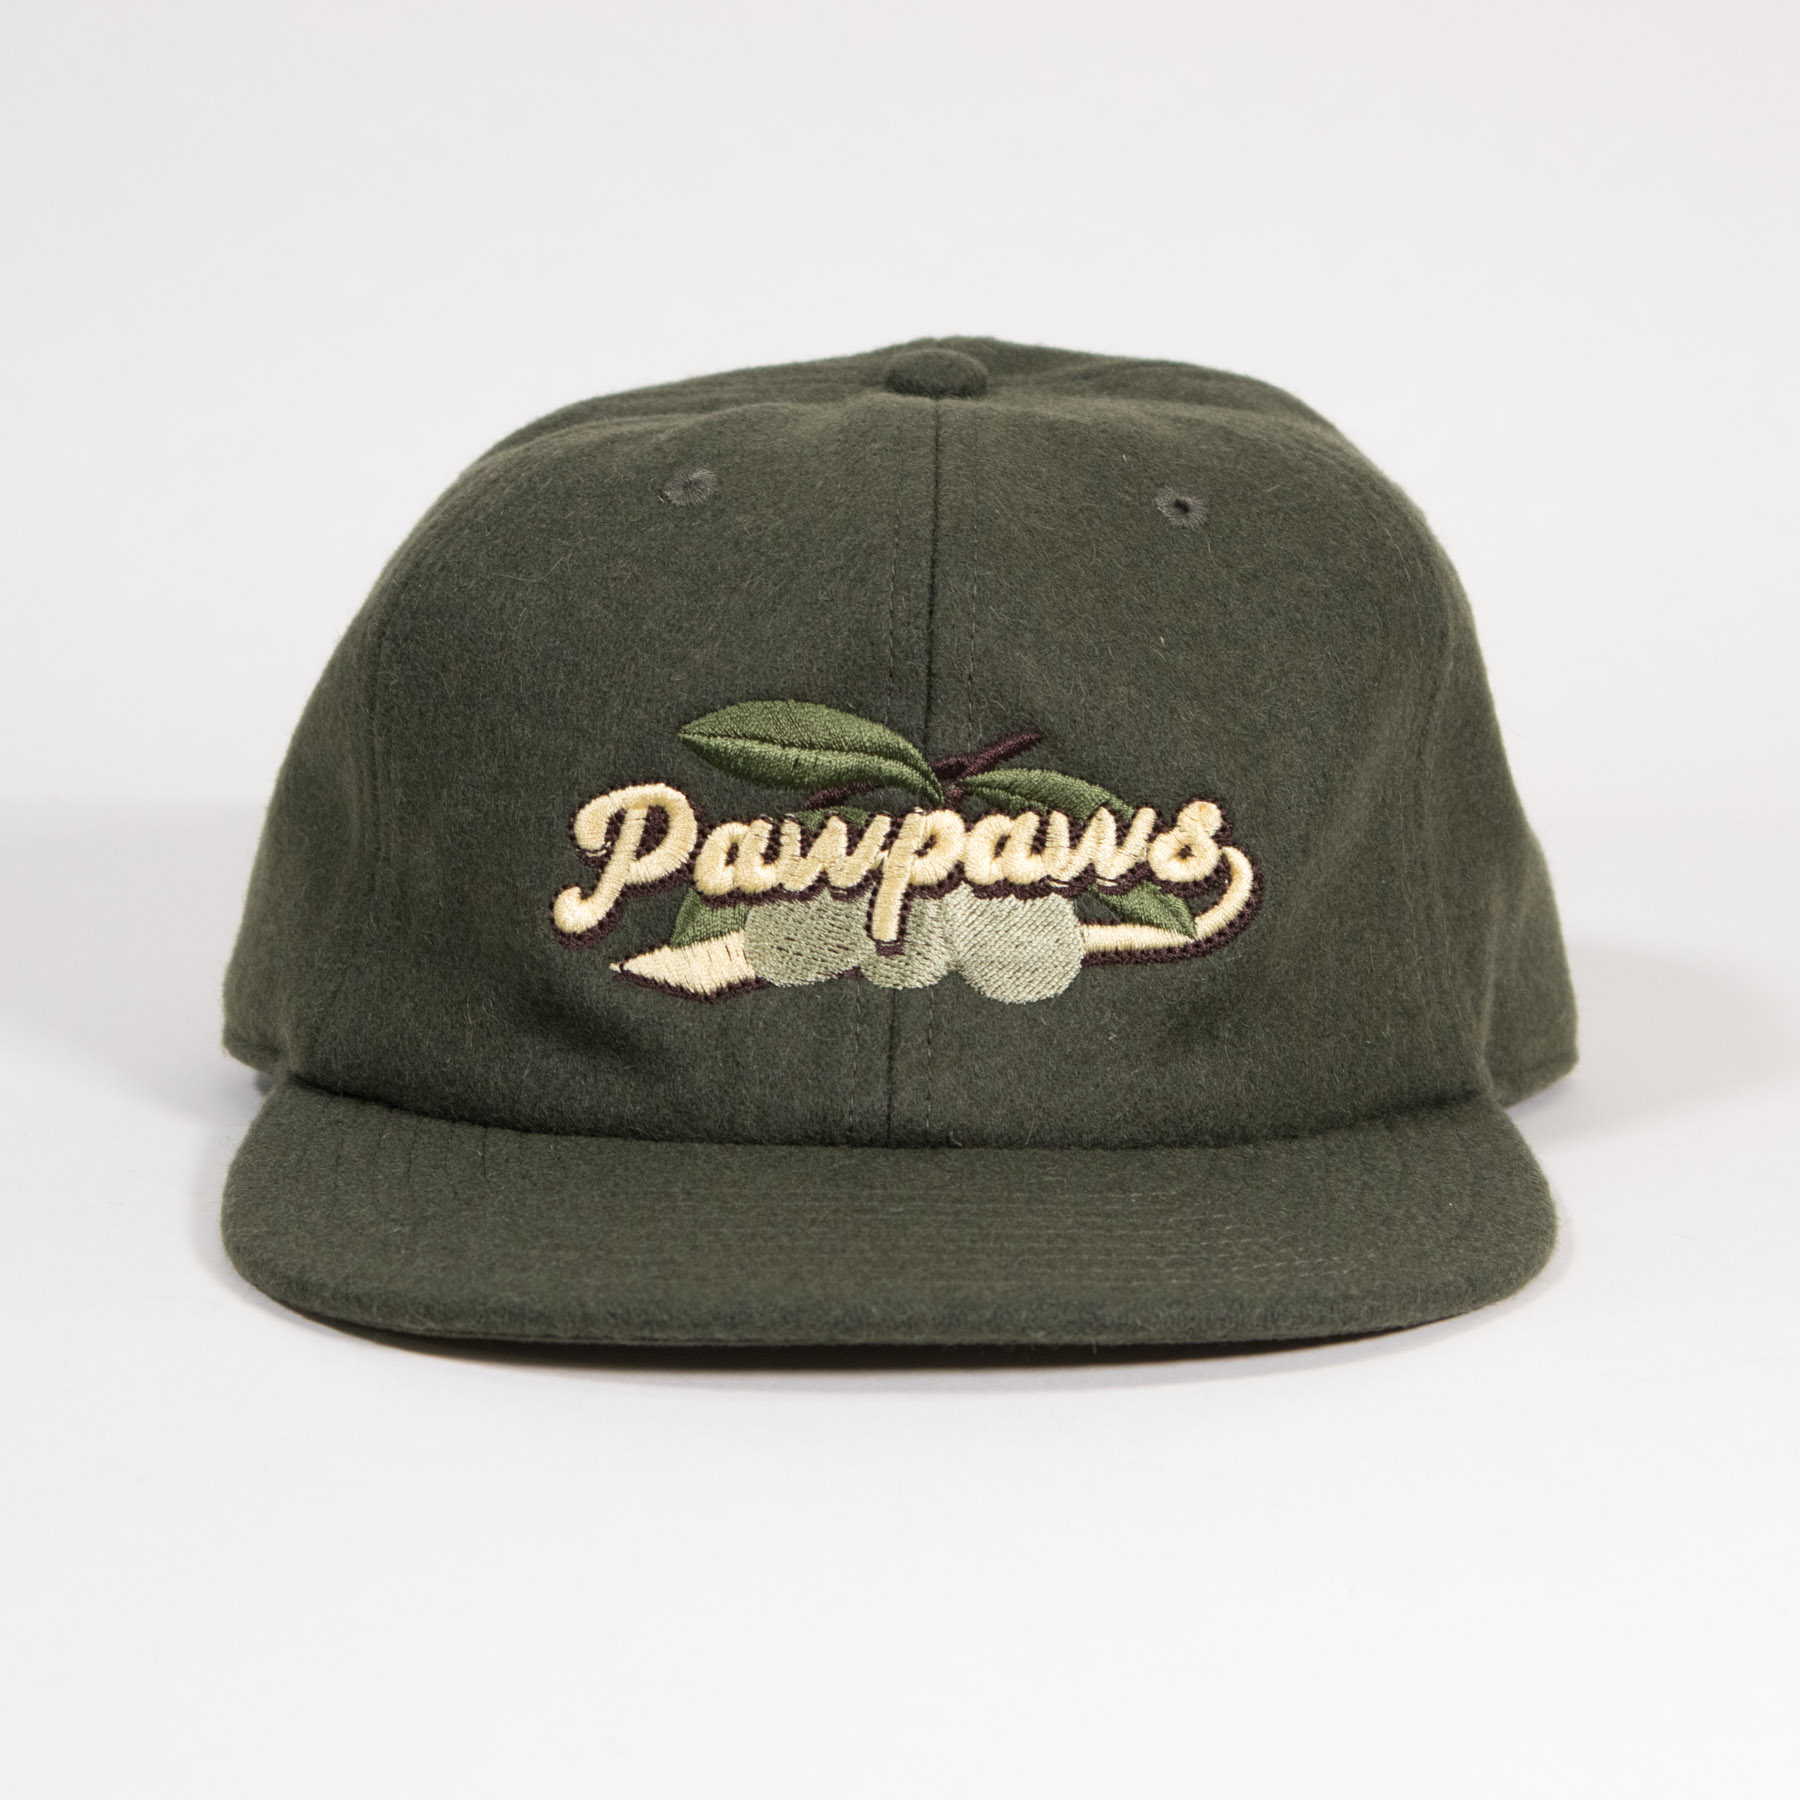 Pawpaw old-school baseball Hat - Crewel and Unusual